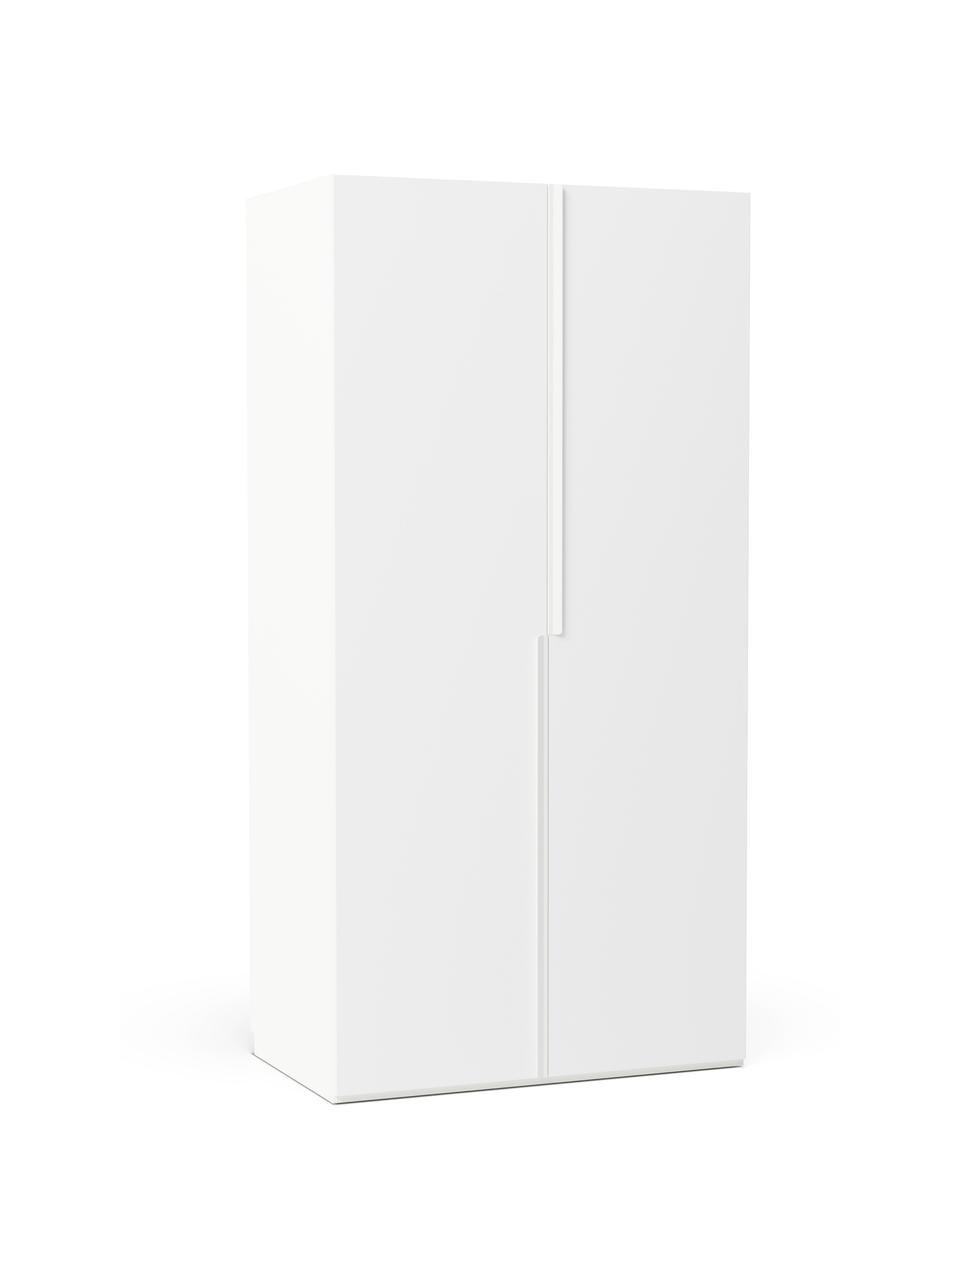 Modulární skříň s otočnými dveřmi Leon, šířka 100 cm, více variant, Bílá, Interiér Basic, výška 200 cm